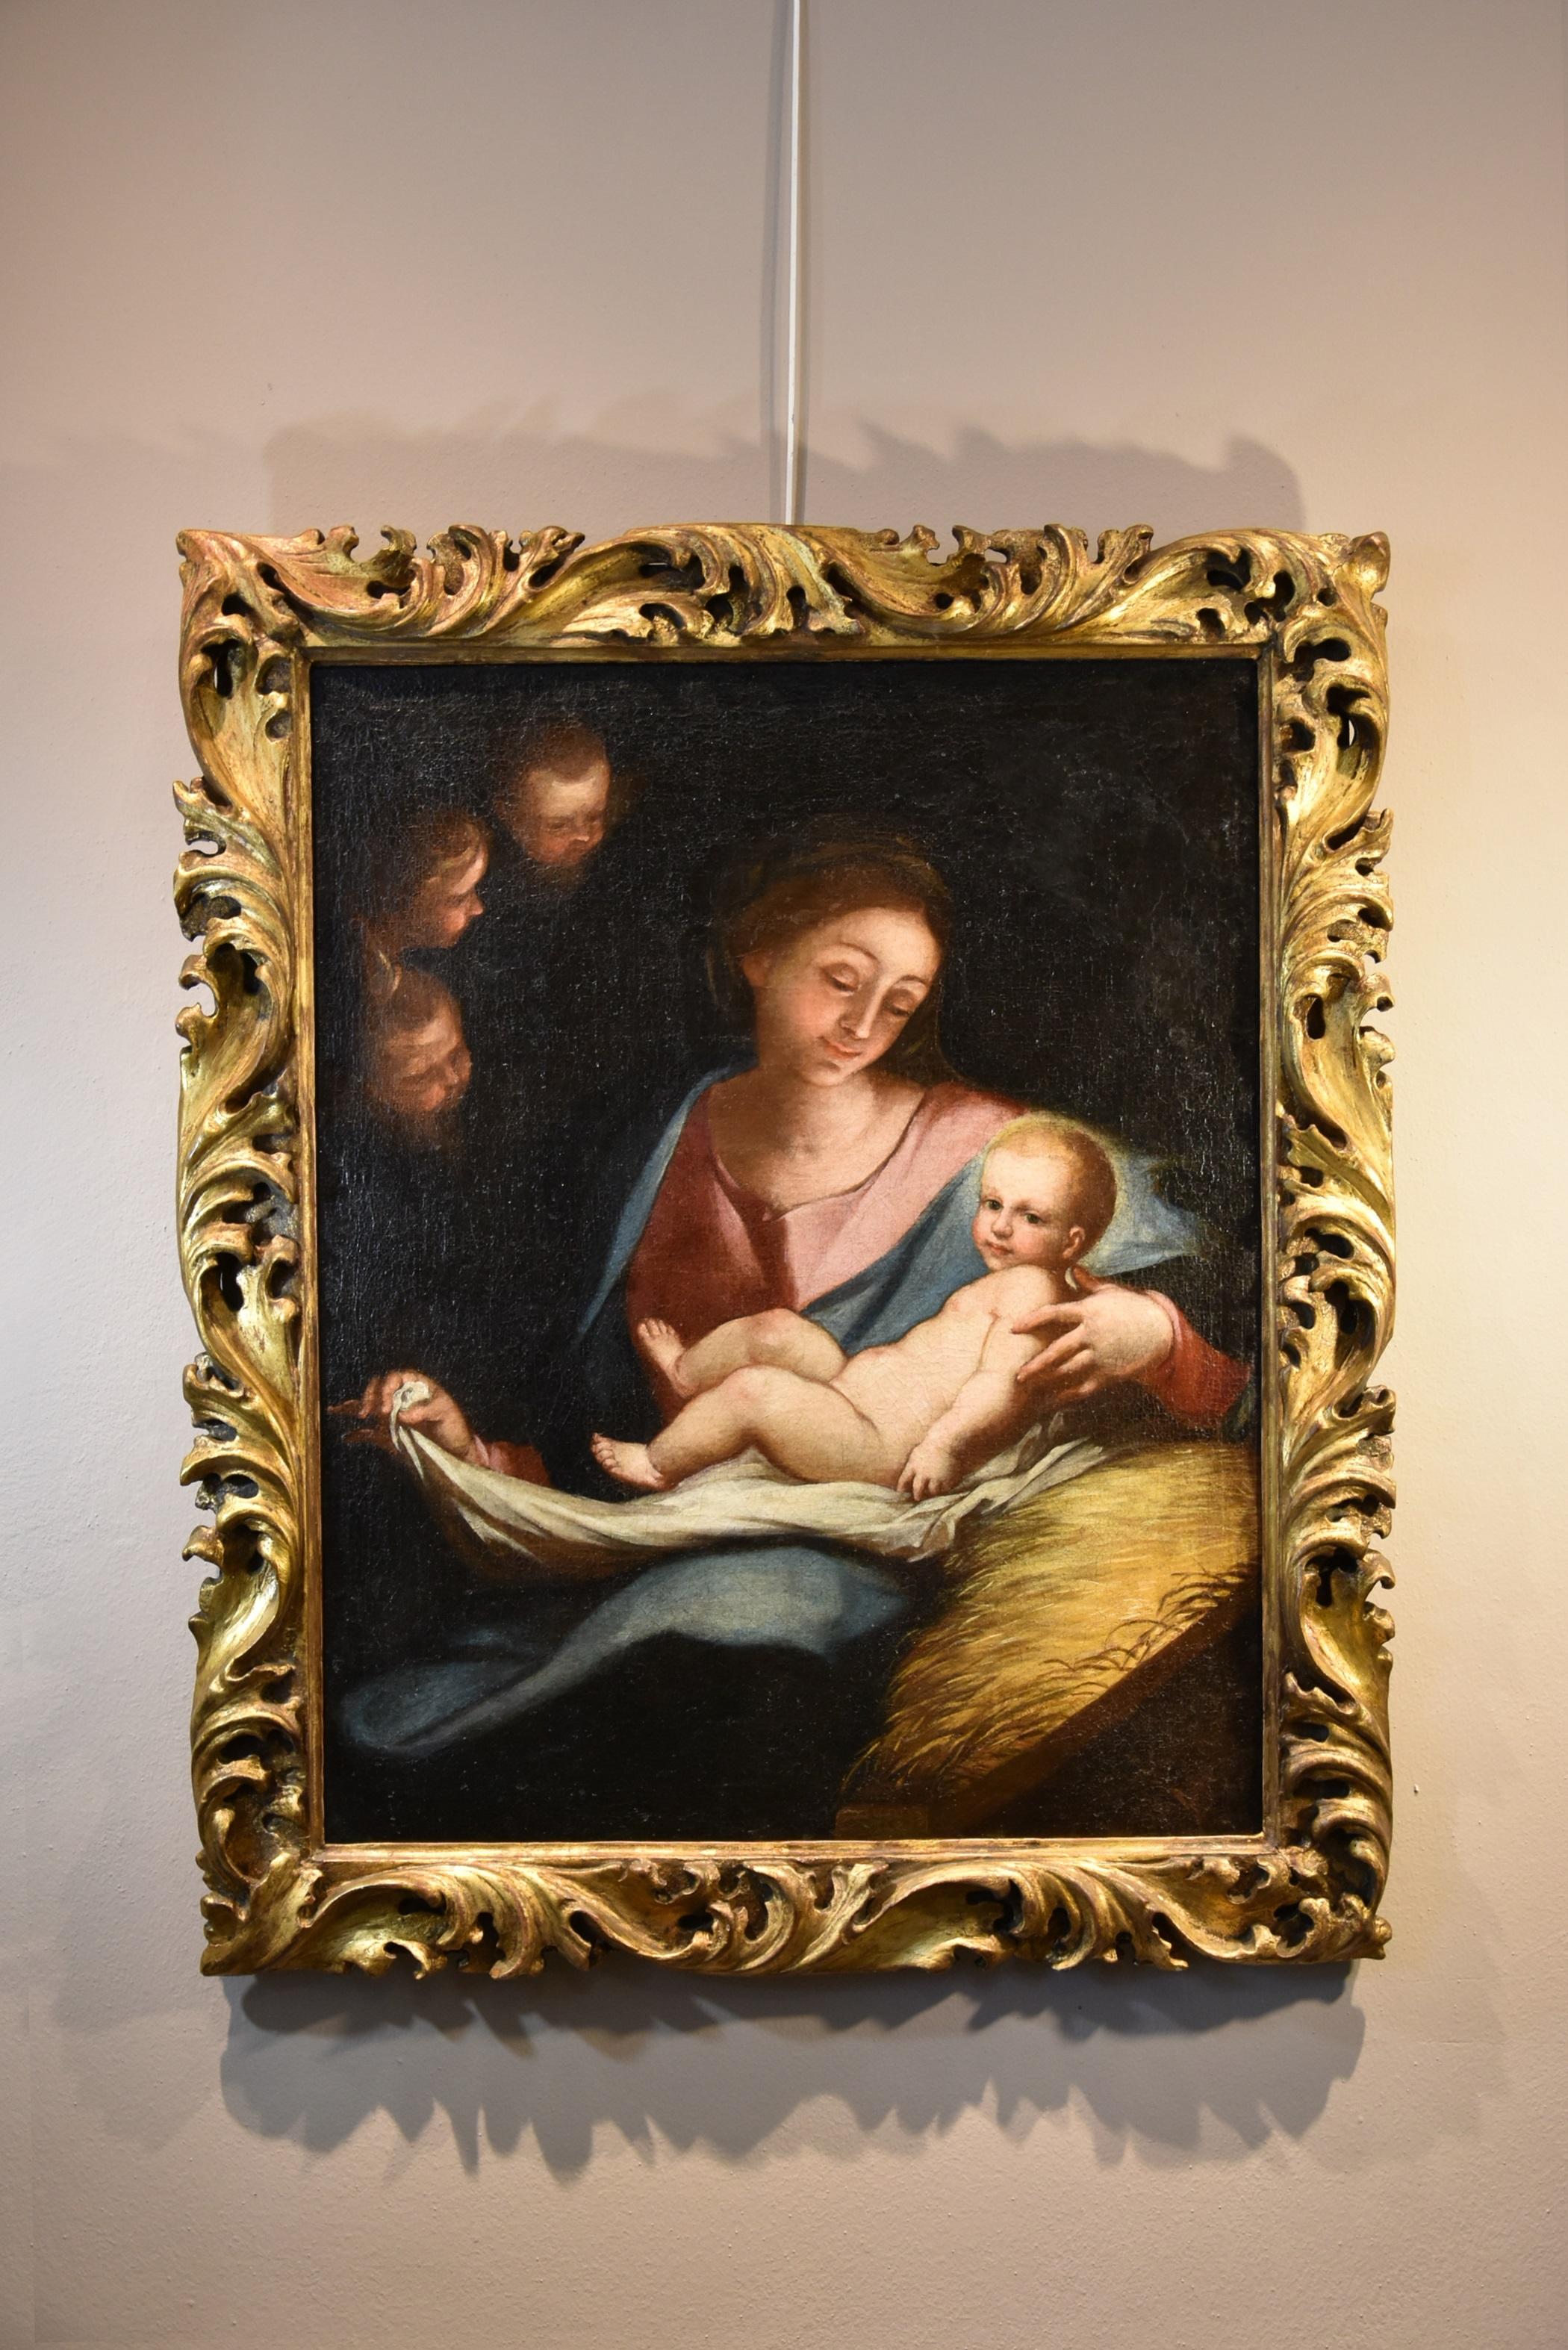  Madonna Maria Piola Gemälde Öl auf Leinwand 17/18. Jahrhundert Alter Meister Religiös (Alte Meister), Painting, von Anton Maria Piola (genoa, 1654 - 1715)